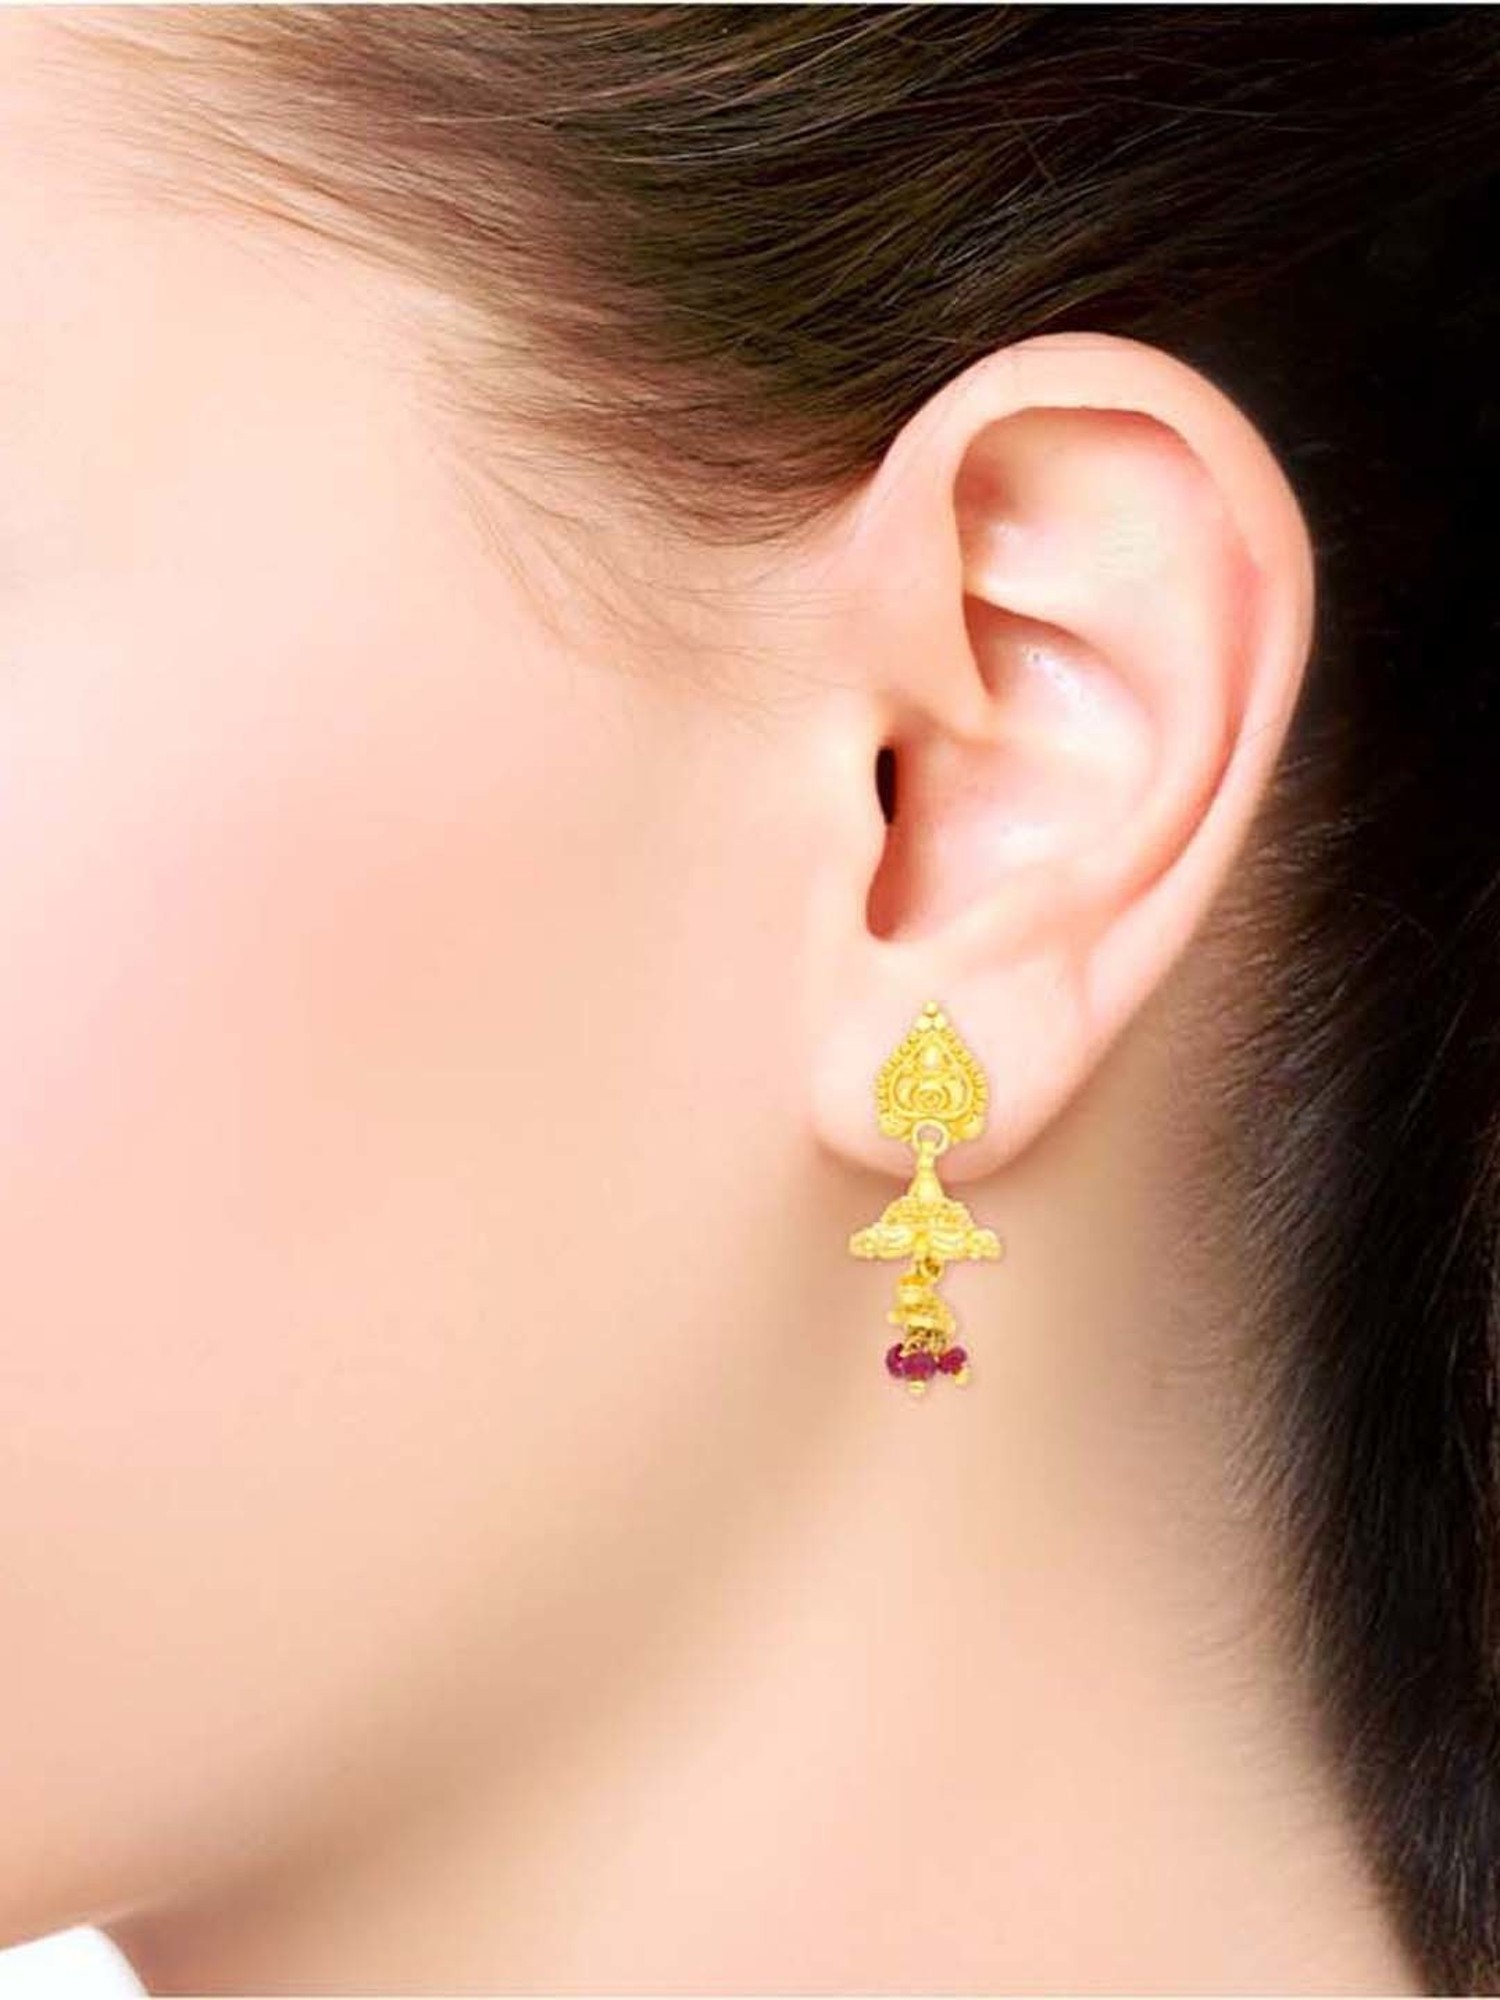 Small studs | Gold earrings models, Small earrings gold, Gold earrings for  kids